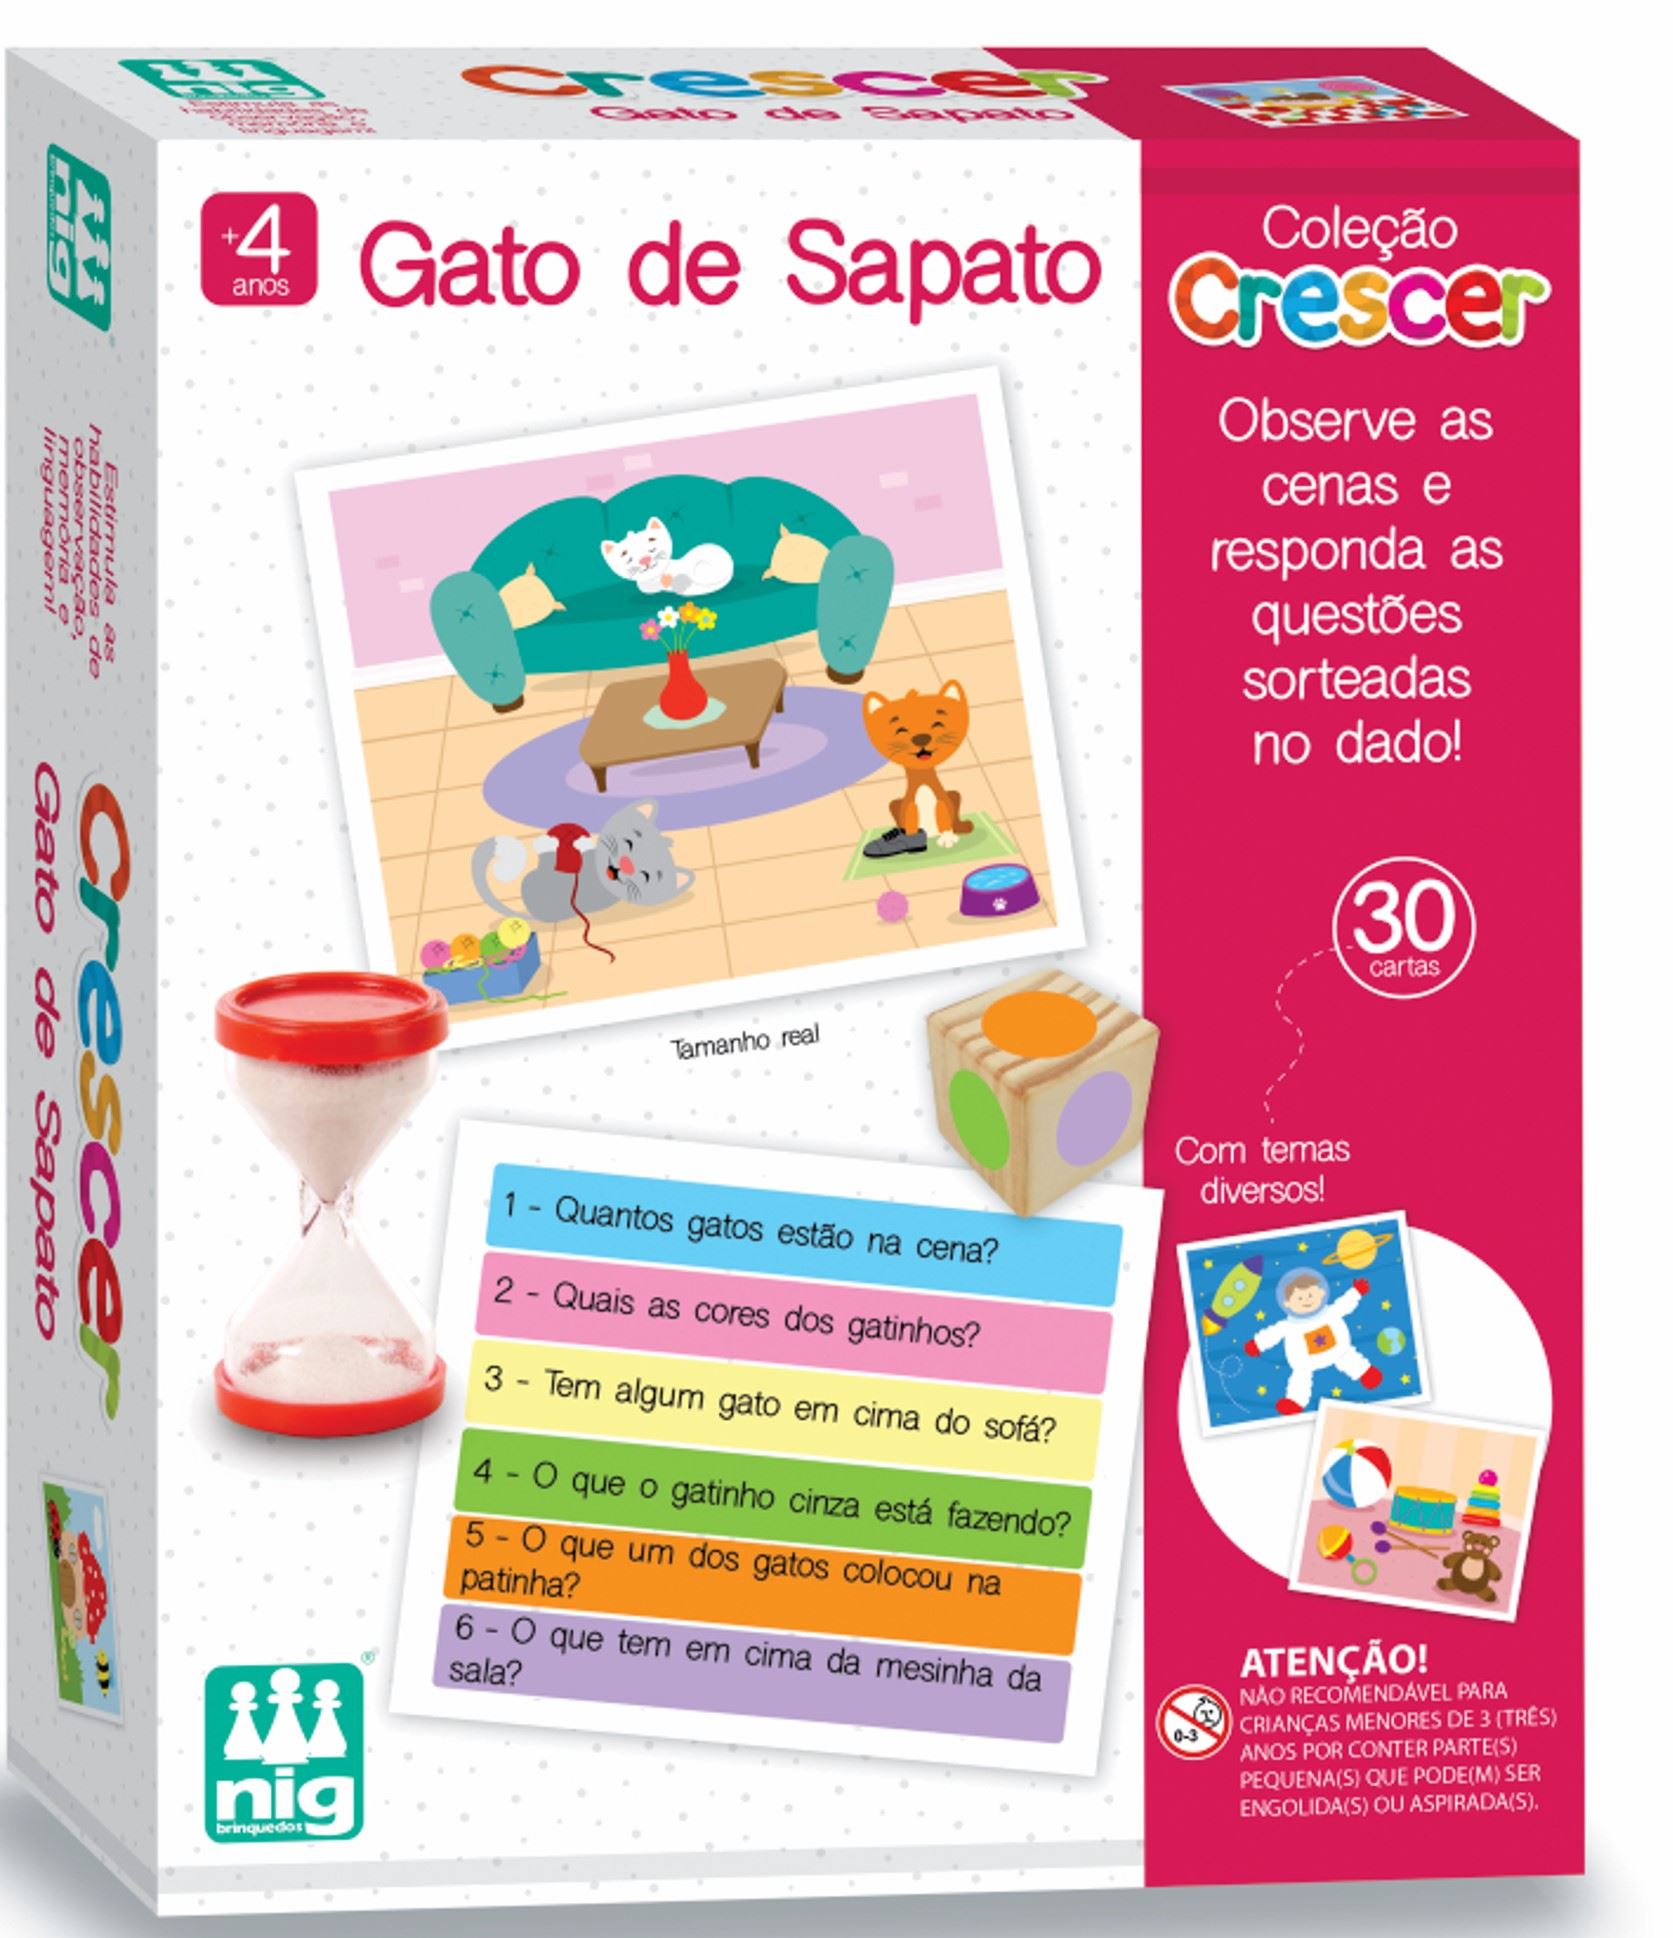 Jogo Gato de Sapato - Nig Brinquedos - Broker Corporativo